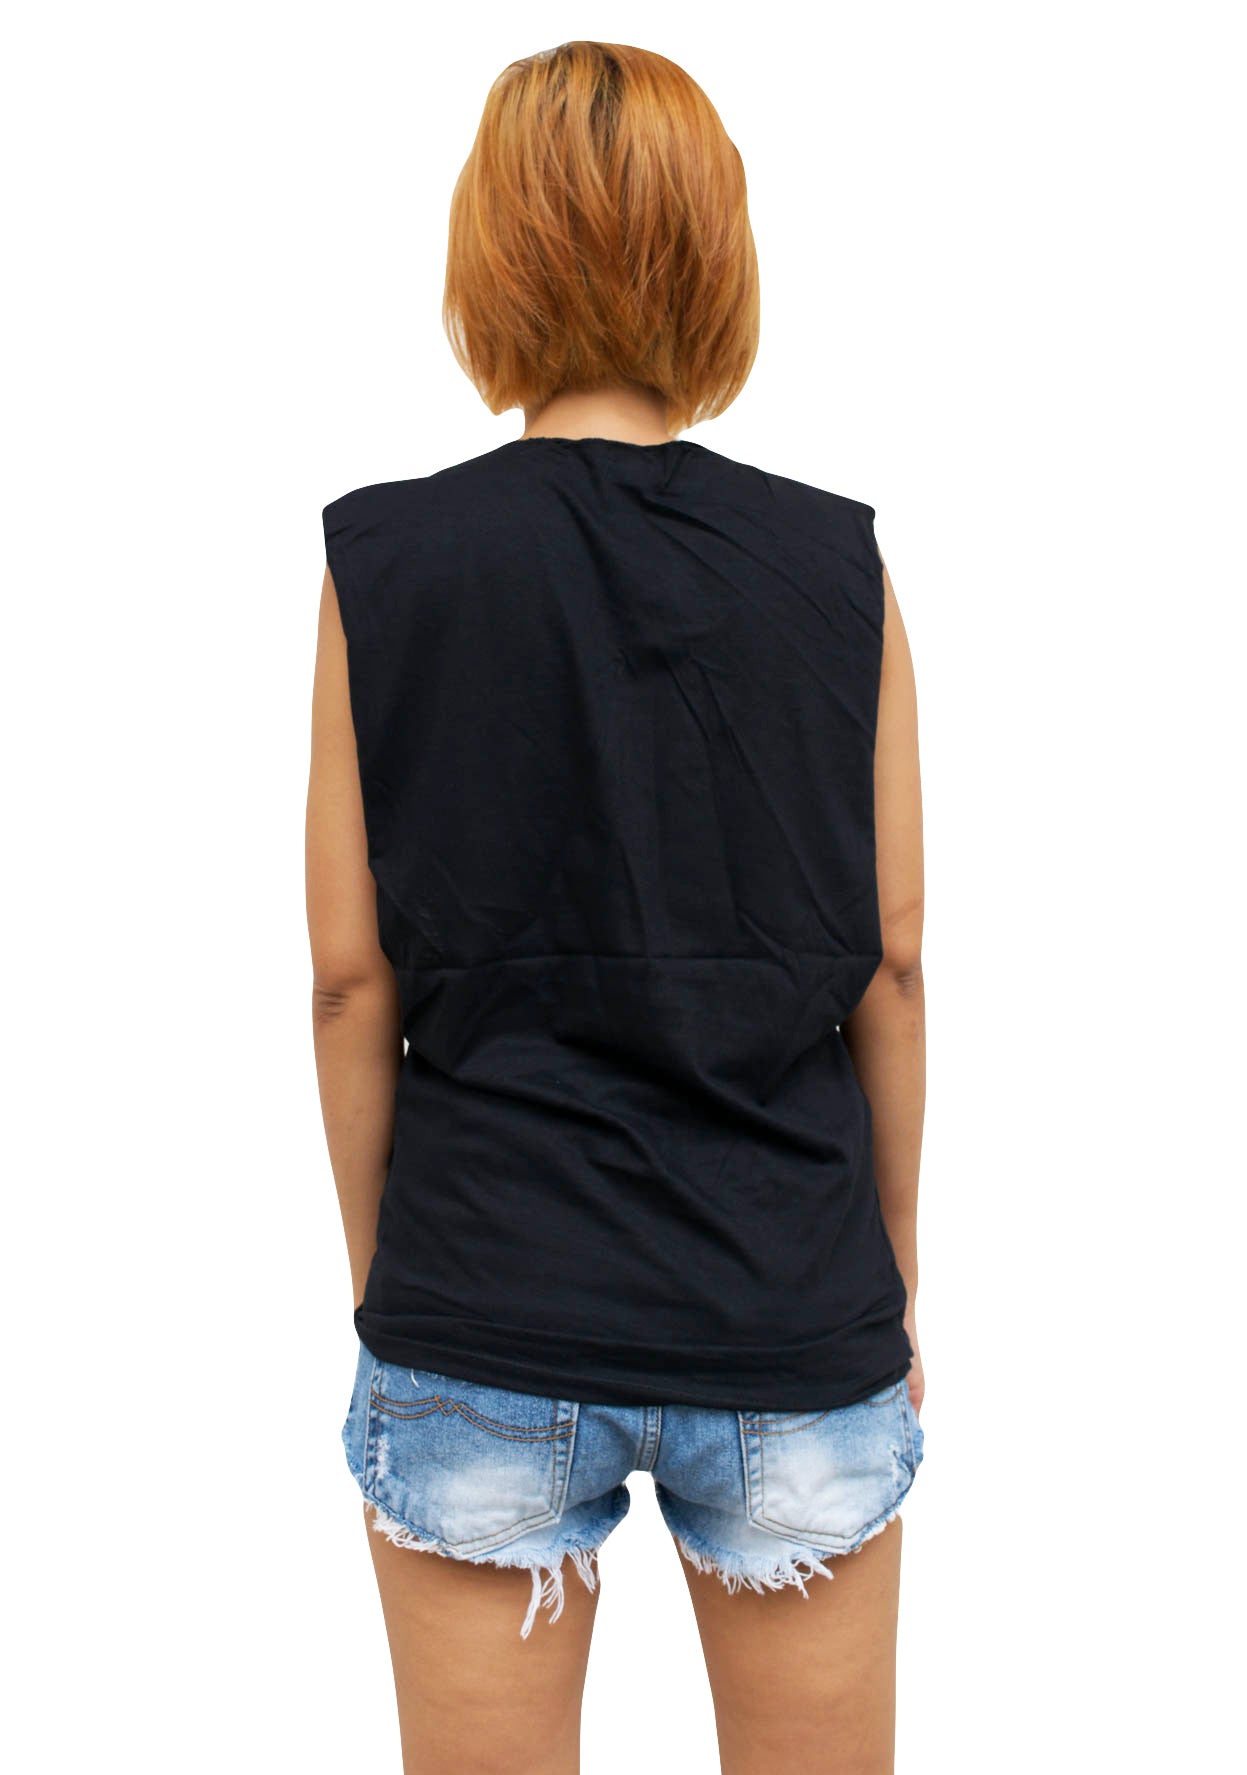 Ladies The Stranglers Vest Tank-Top Singlet Sleeveless T-Shirt